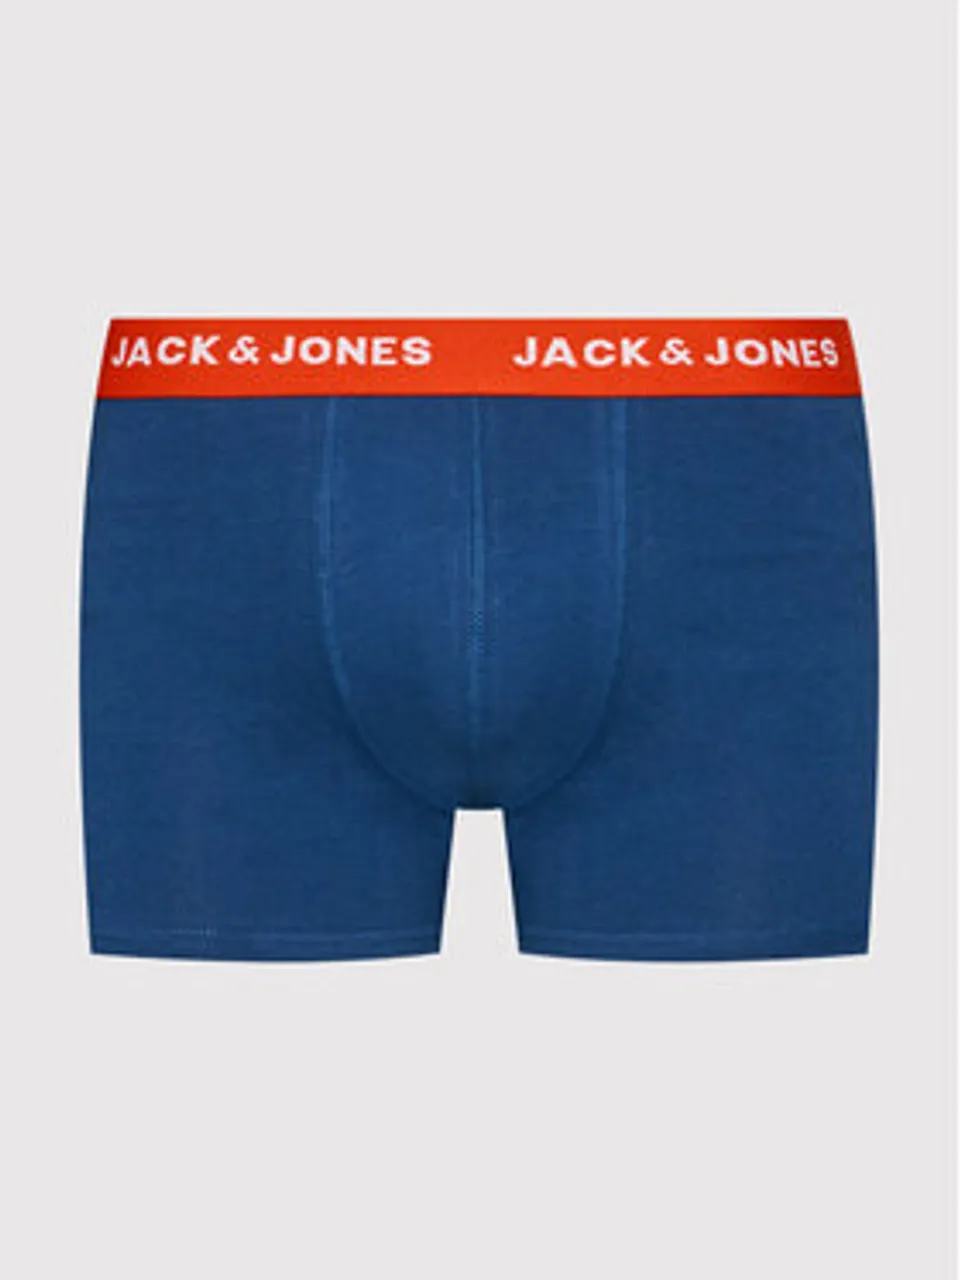 Jack&Jones 5er-Set Boxershorts Lee 12144536 Bunt